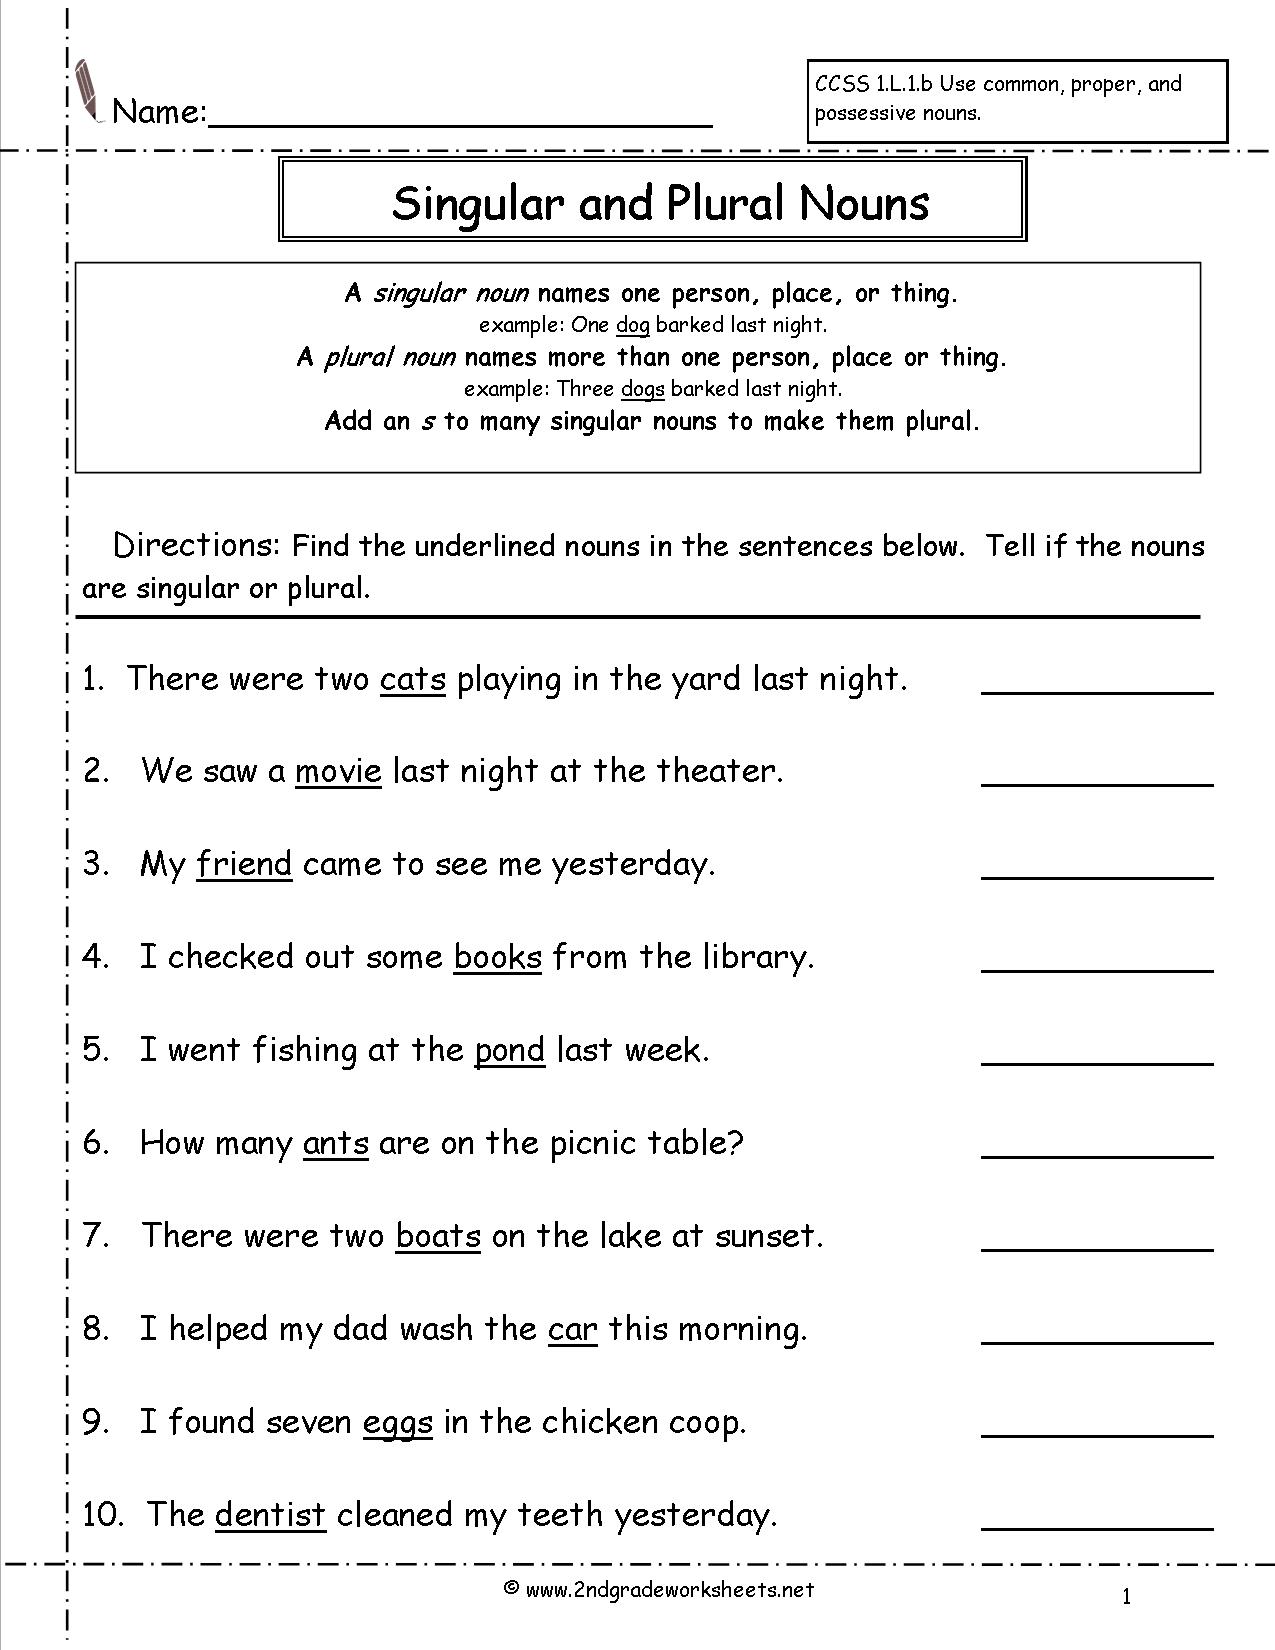 Worksheet On Singular And Plural